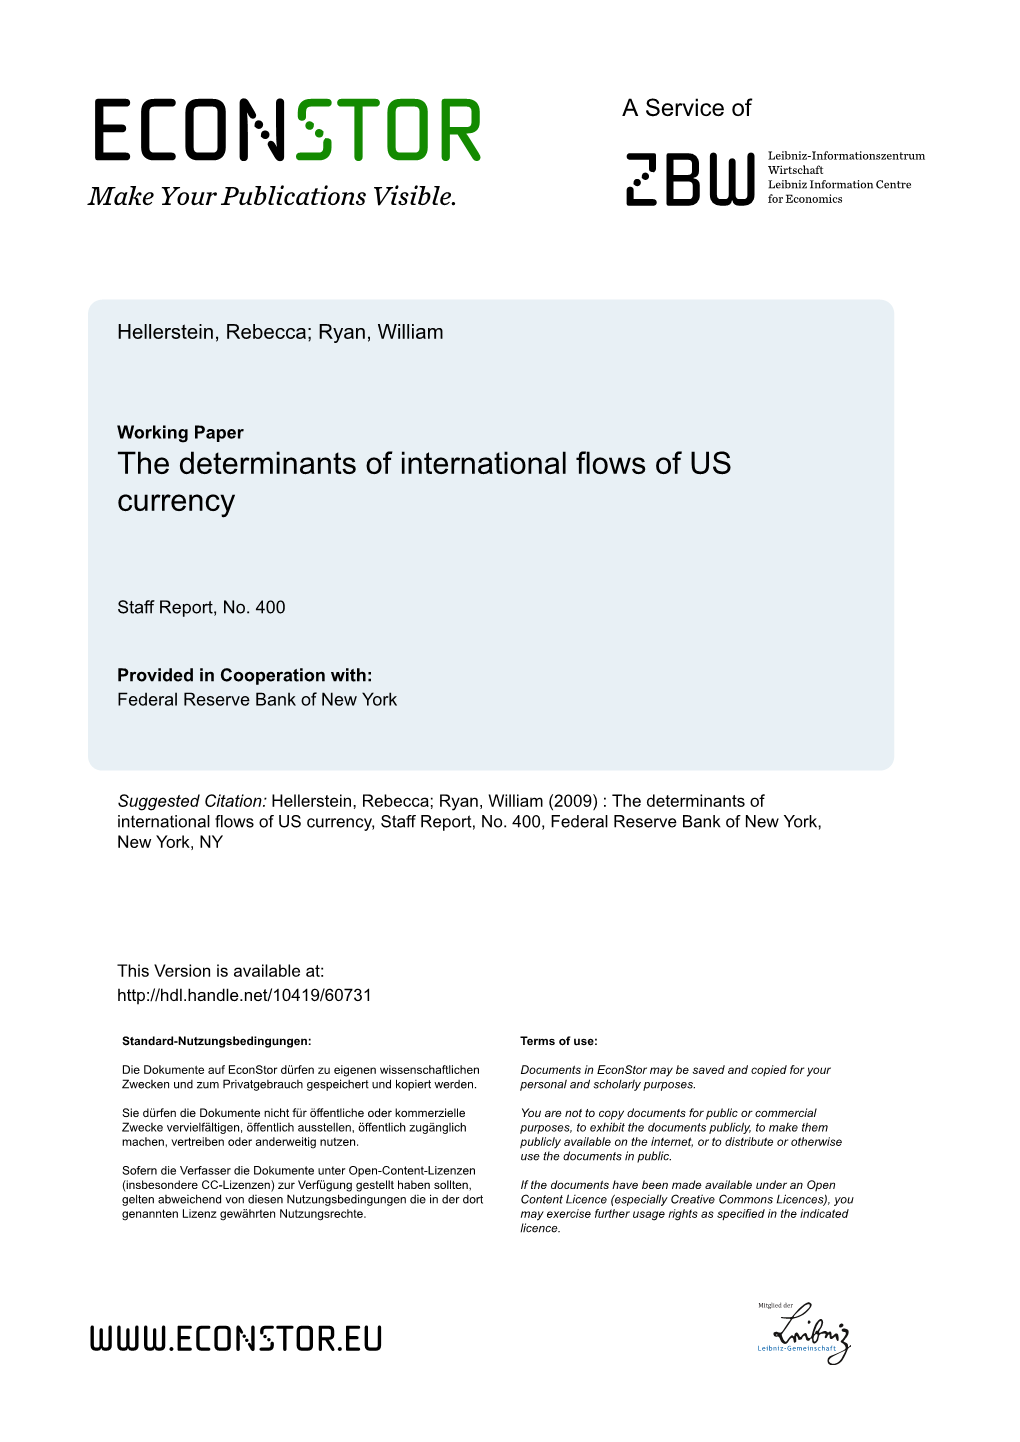 The Determinants of International Flows of U.S. Currency